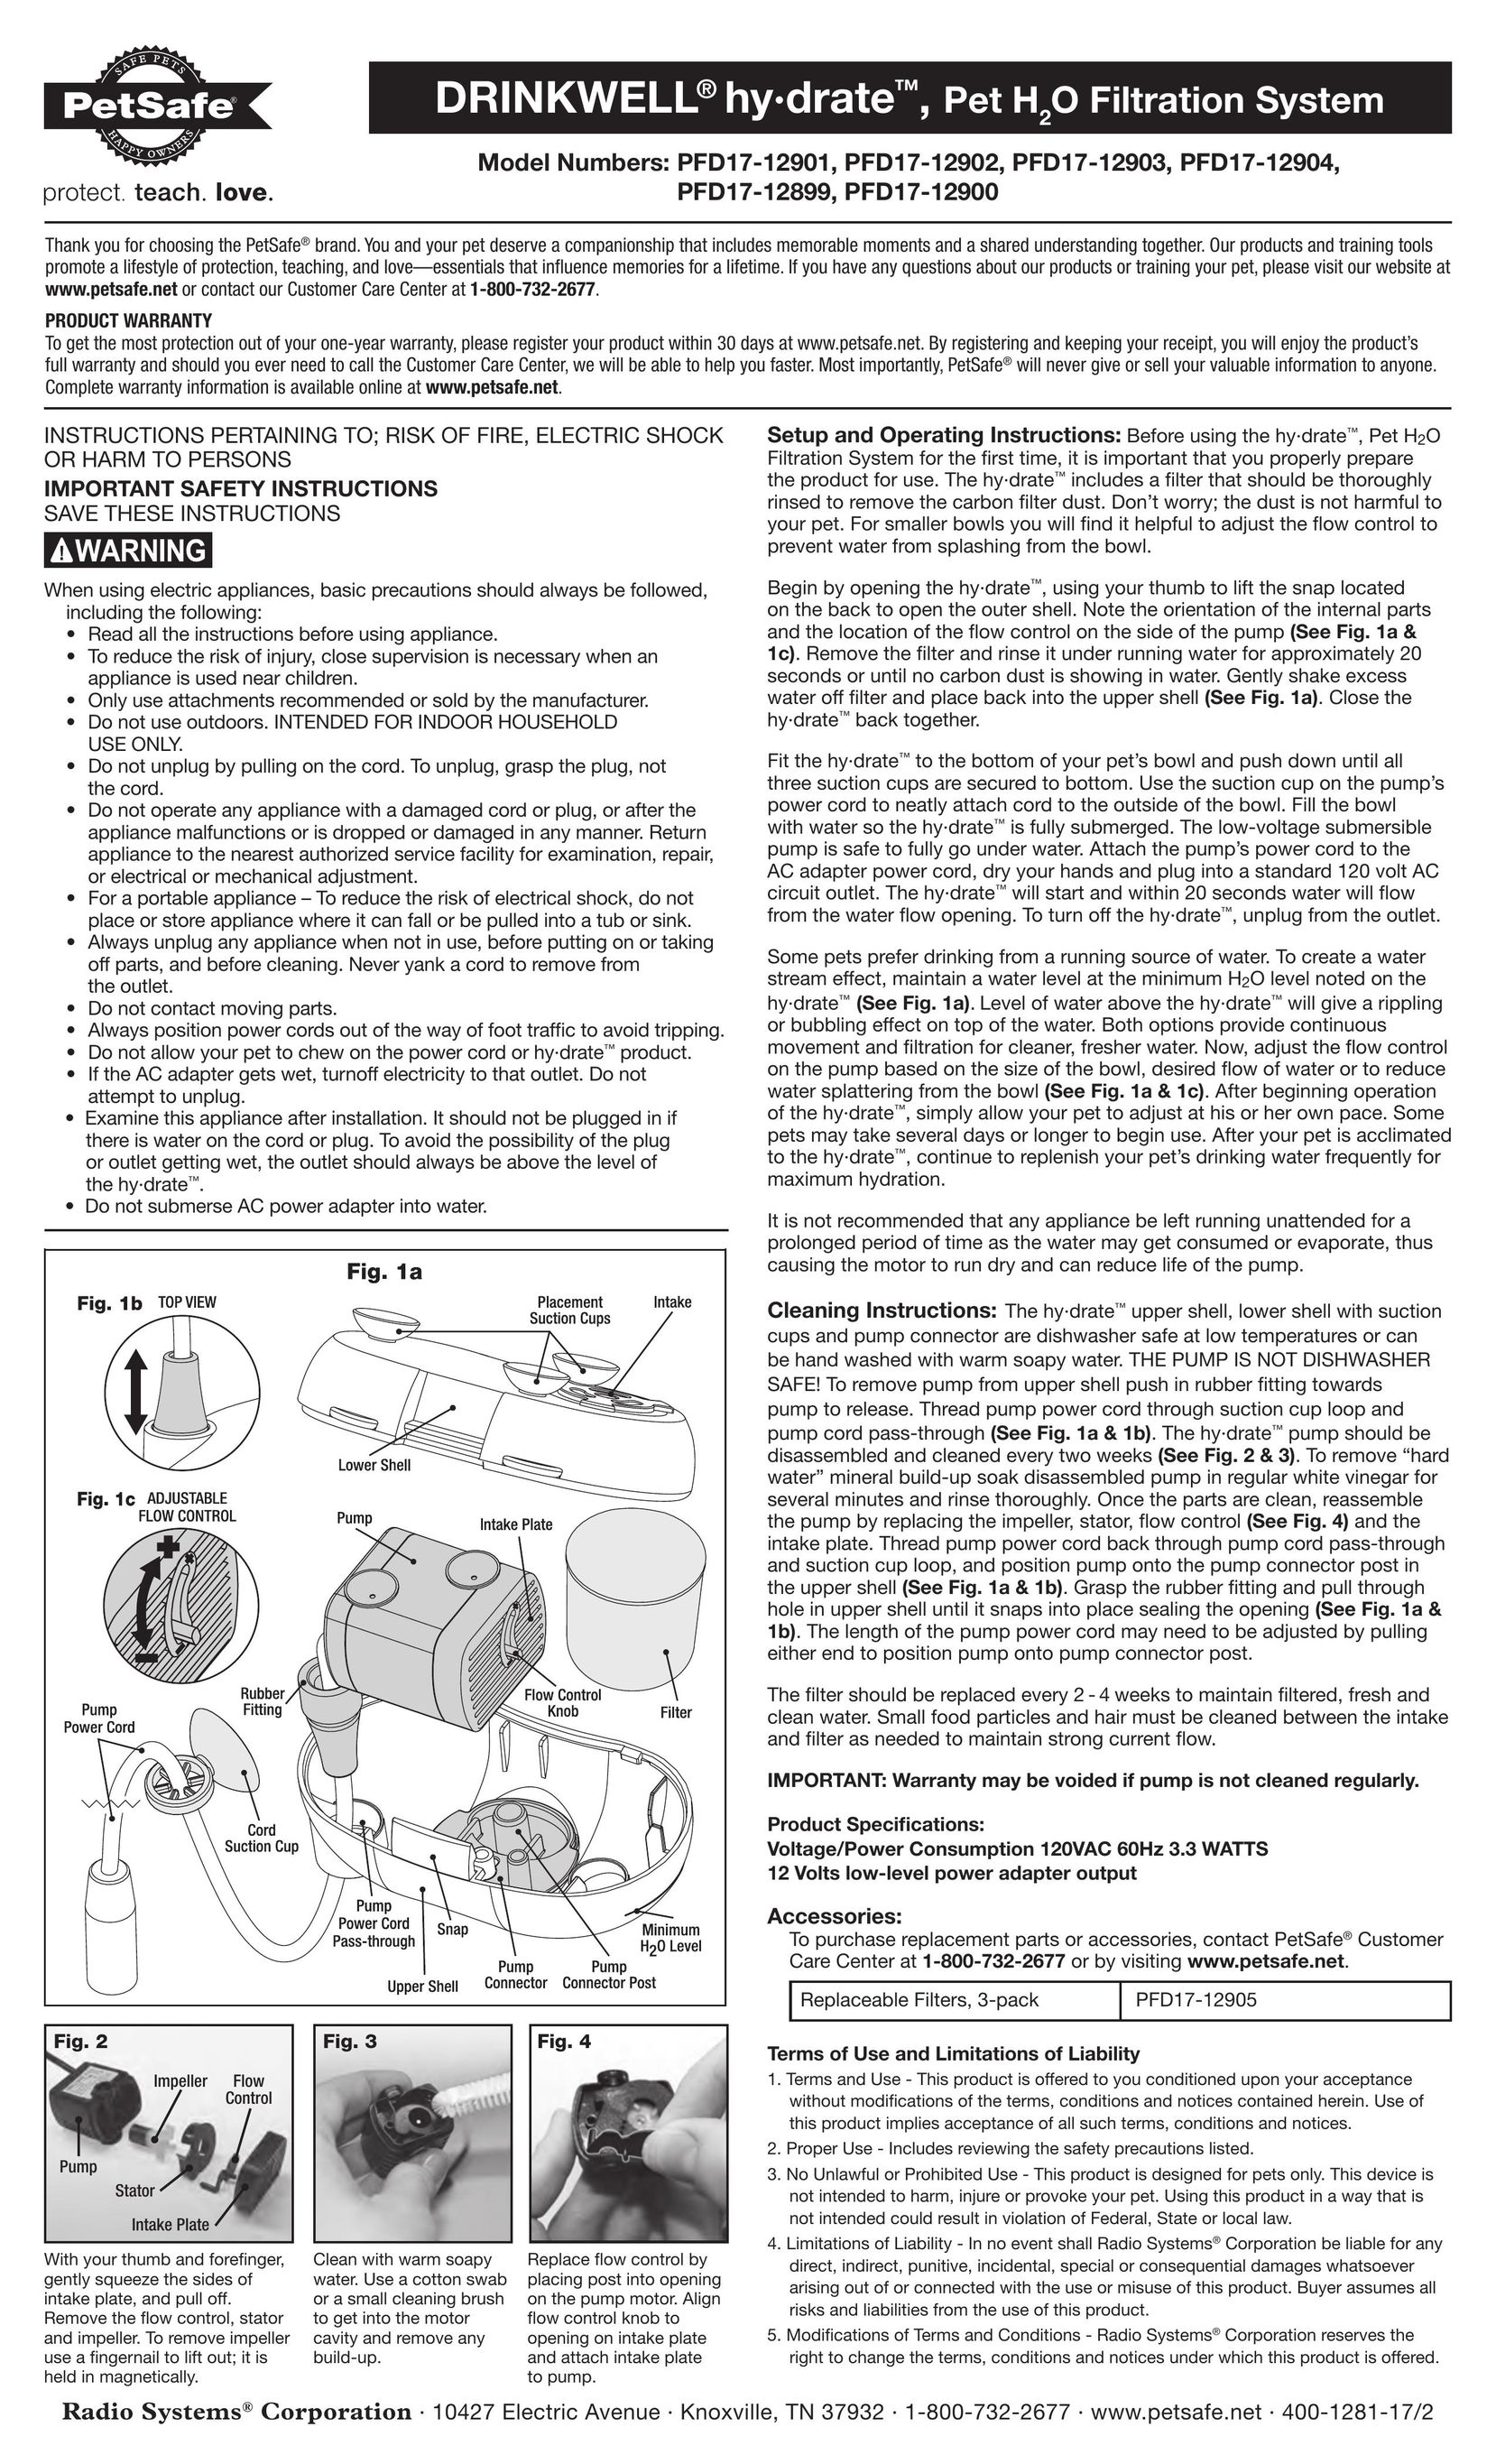 Petsafe PFD17-12899 Water System User Manual